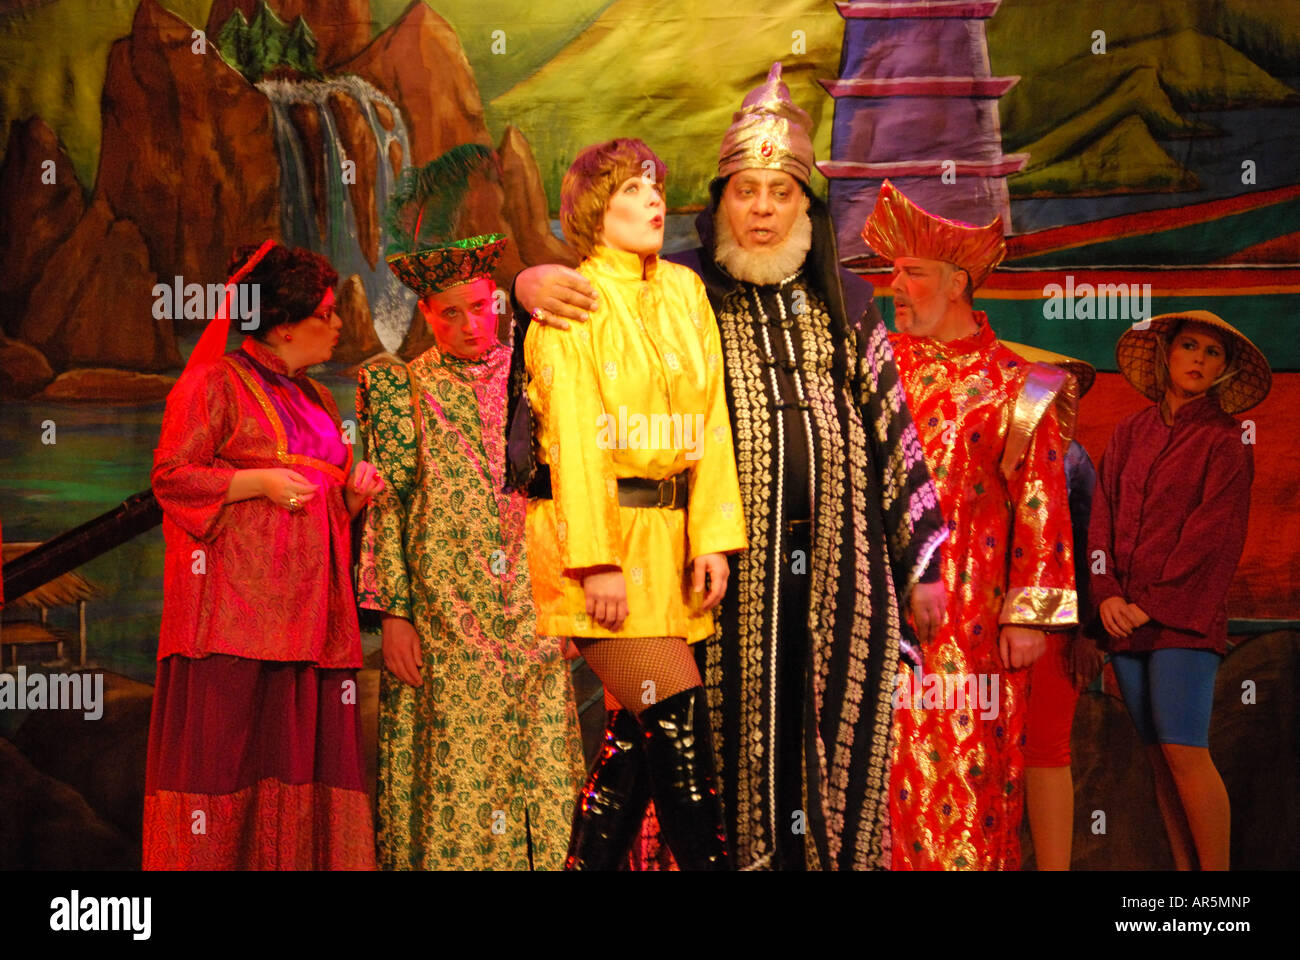 'Aladdin' Pantomime play, Concorde Club, Middlesex, England, United Kingdom Stock Photo